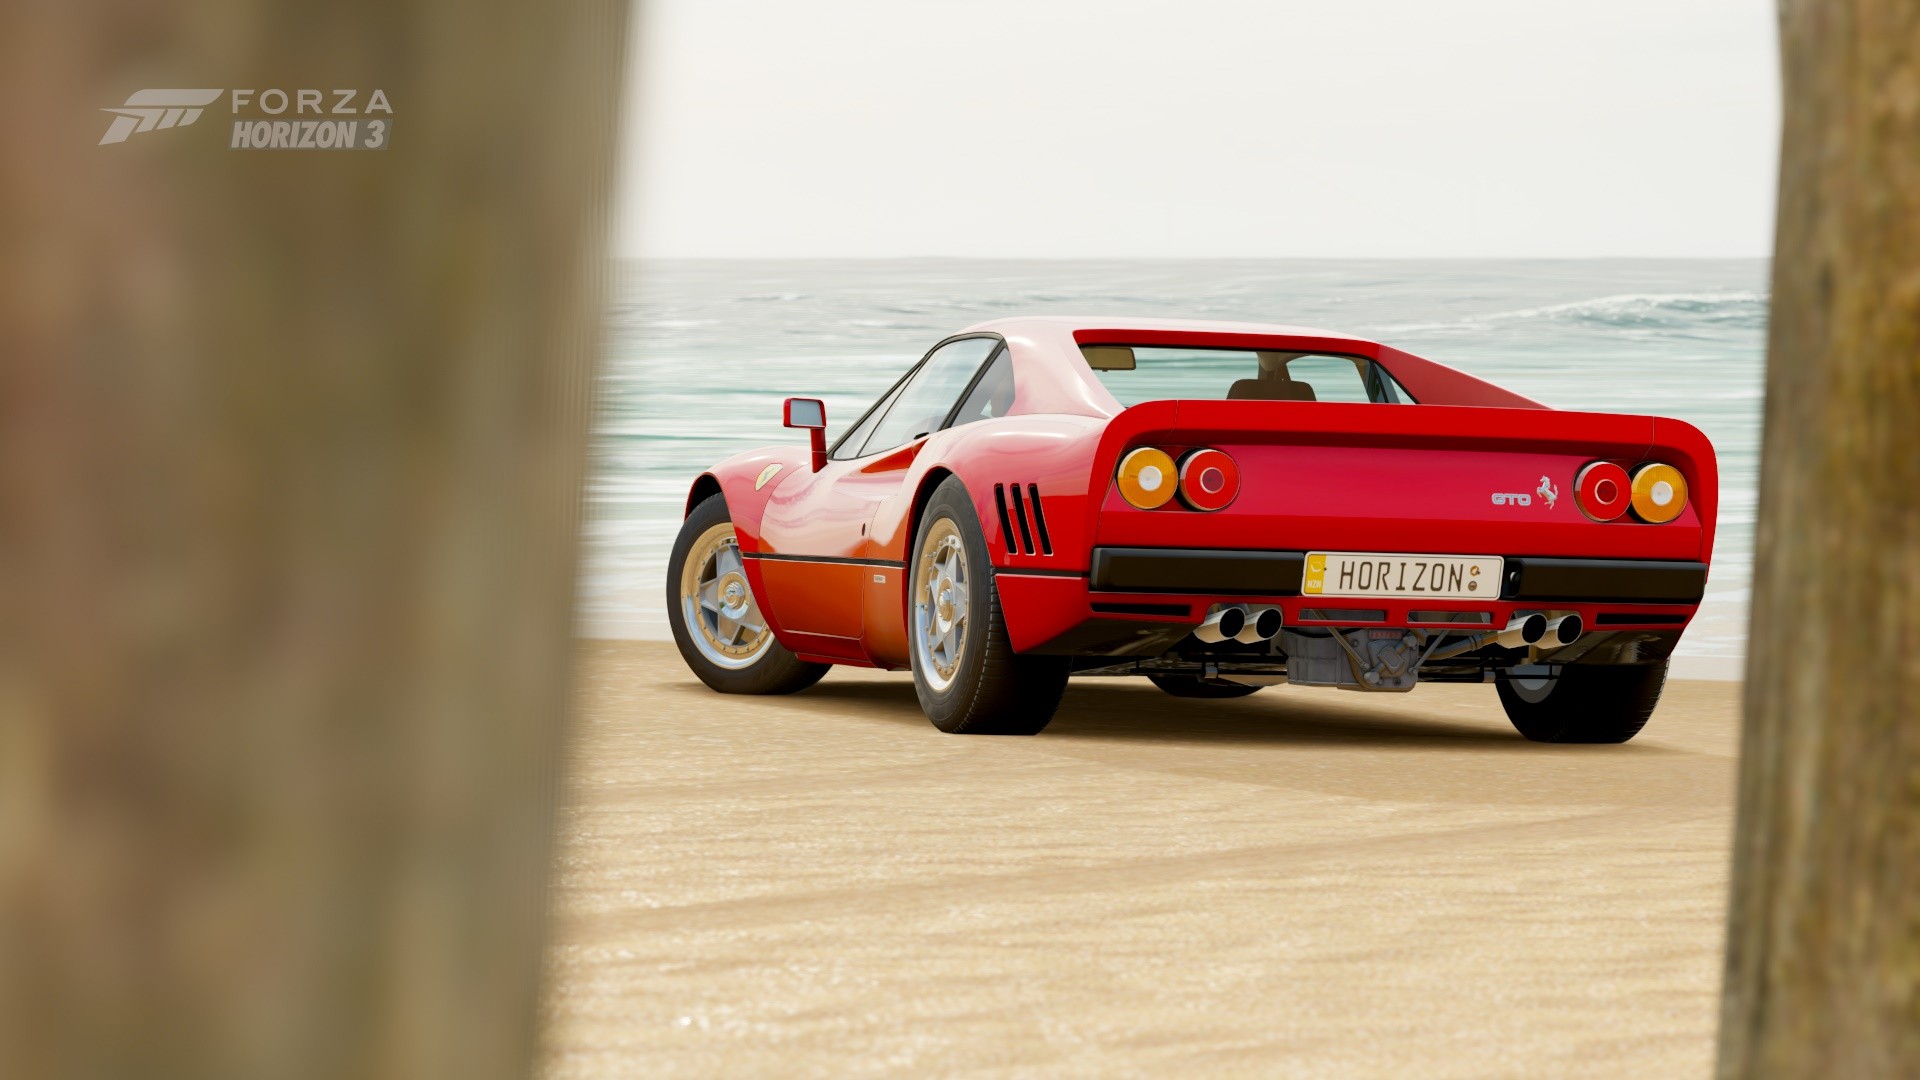 General 1920x1080 Forza Horizon 3 video games Ferrari car vehicle red cars